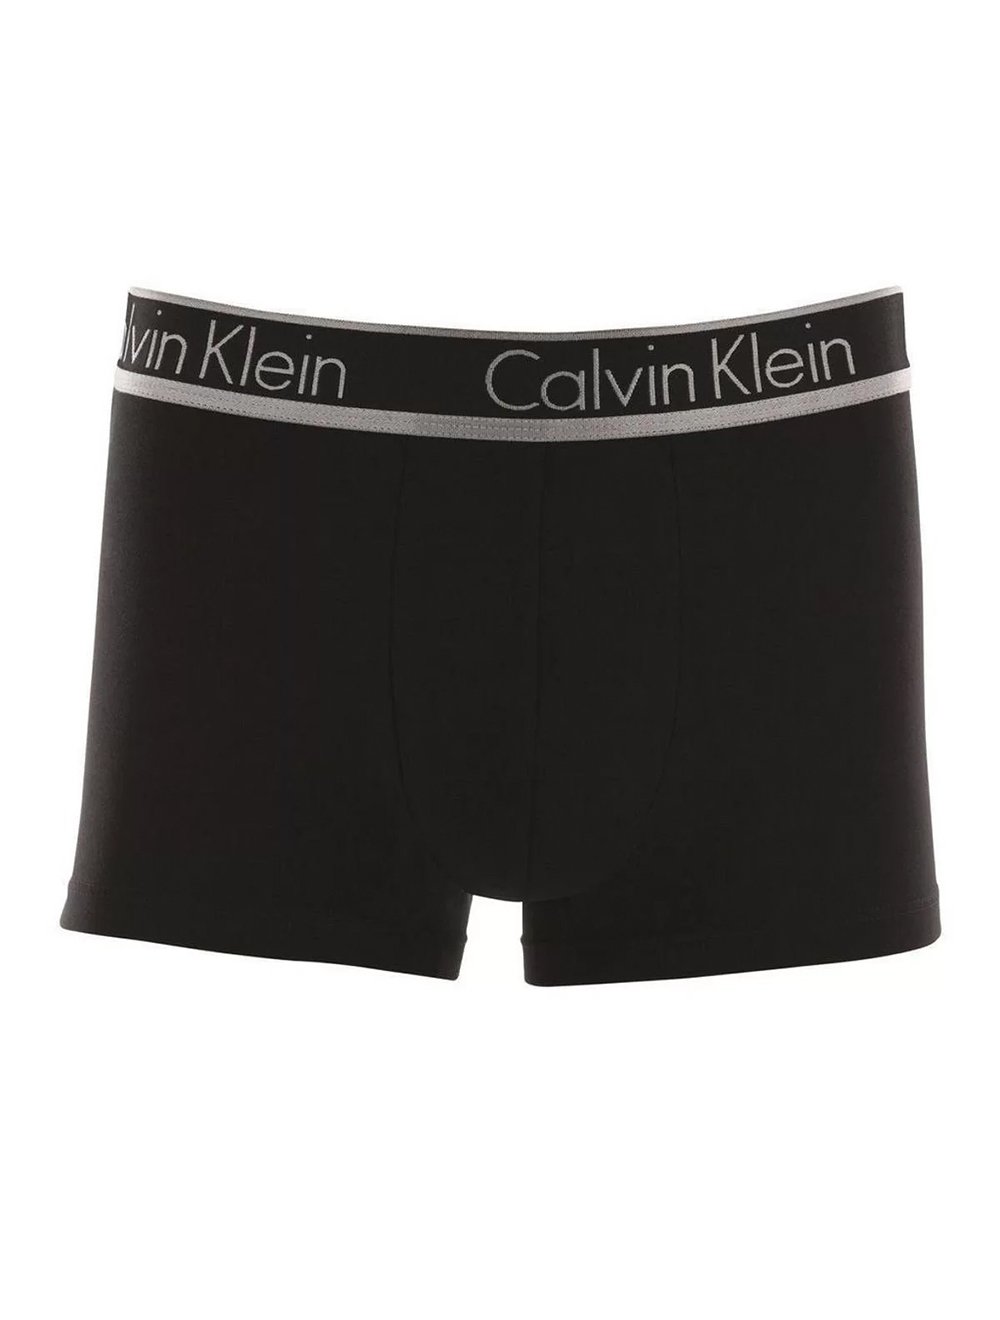 Cueca Calvin Klein Trunk Modal Prata Preta  C10.03 PT02 1UN